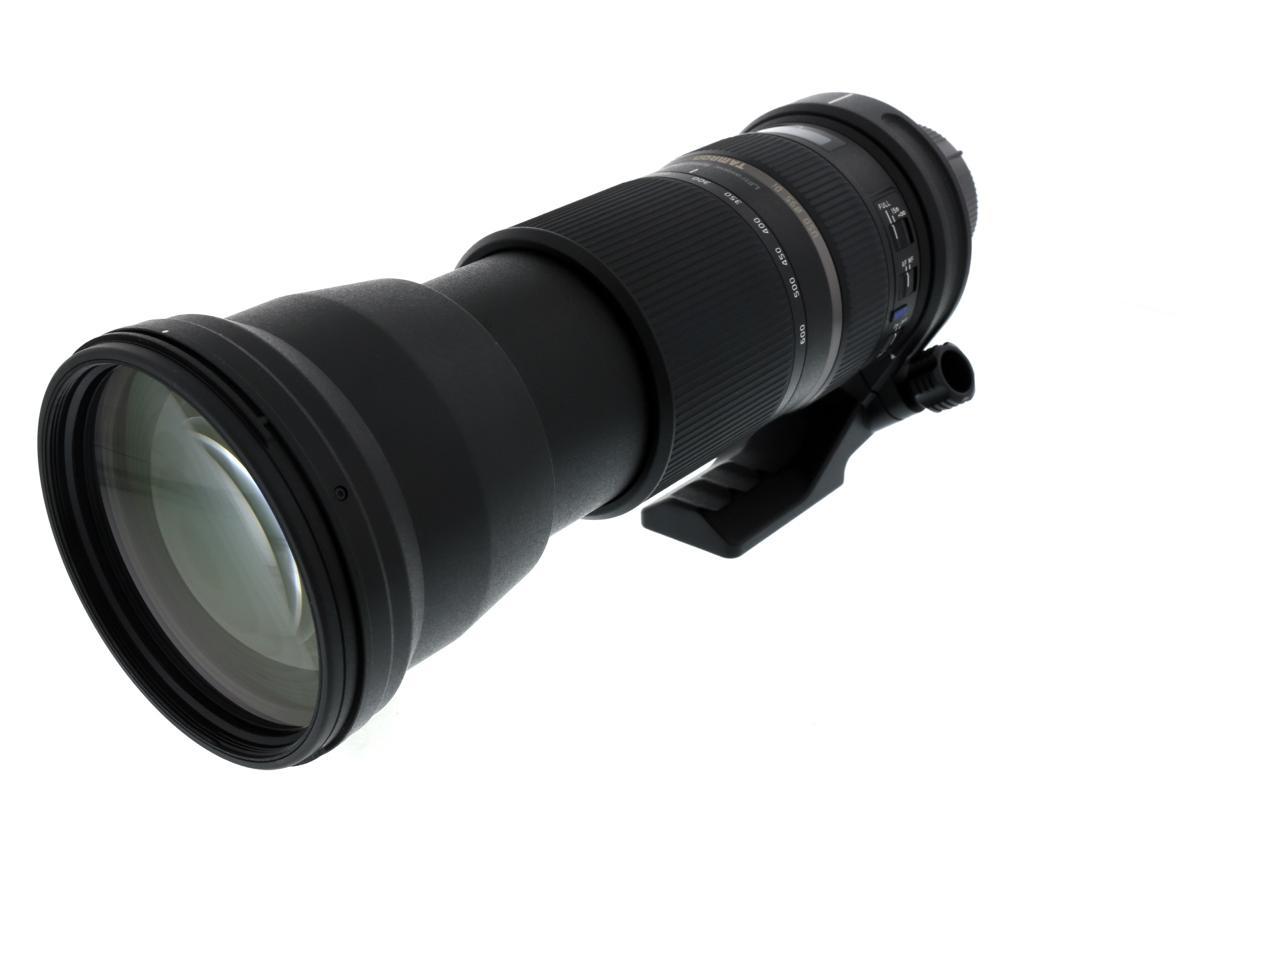 Tamron Lens A011 SP 150-600mm F/5-6.3 Di VC USD Lens for Nikon 